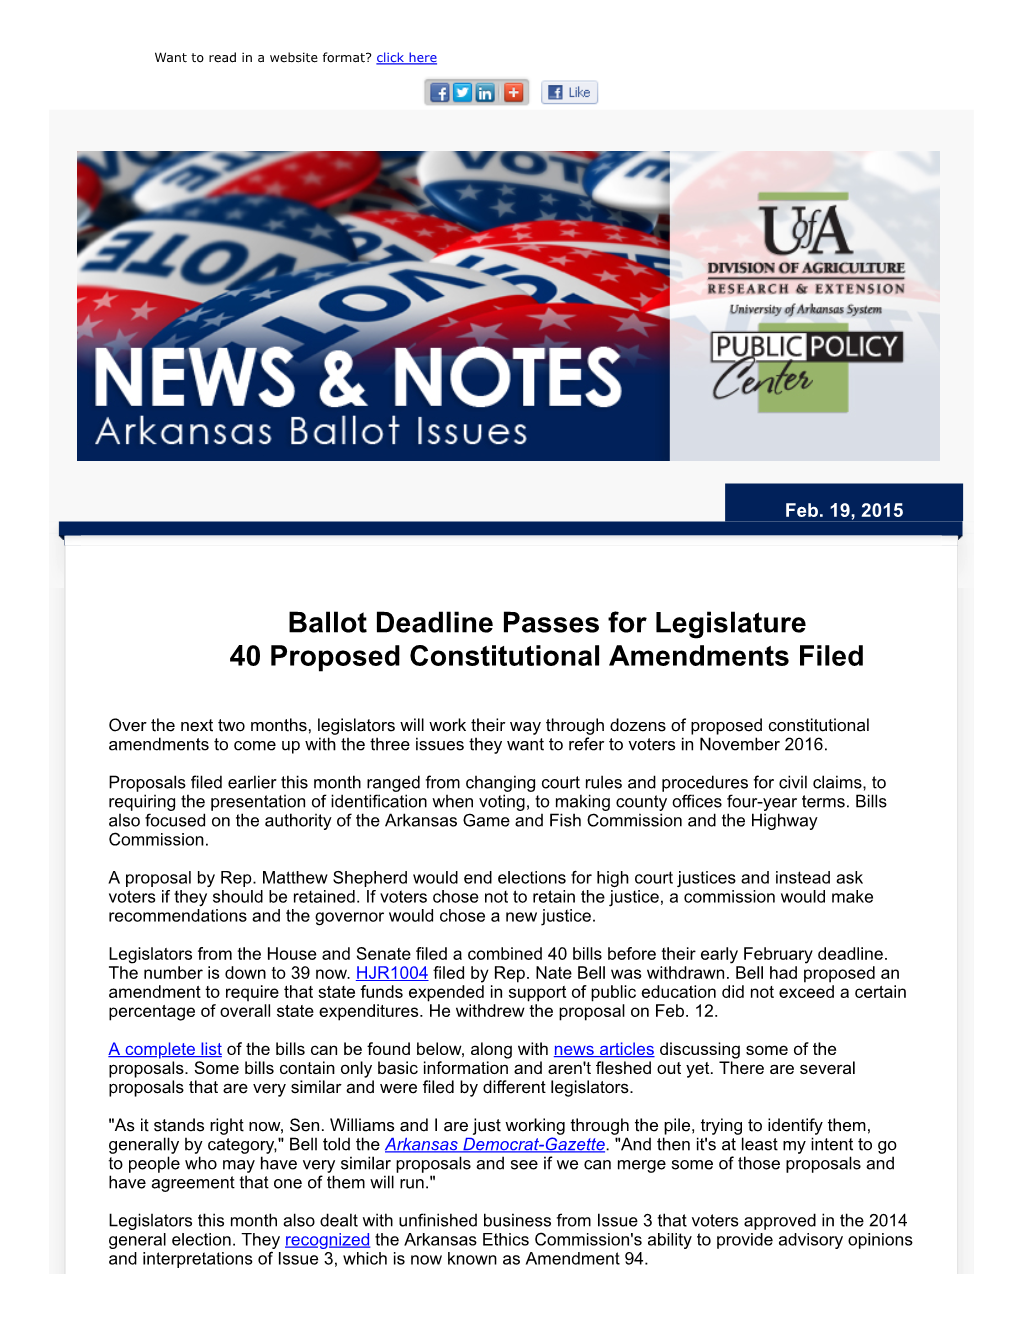 Ballot Deadline Passes for Legislature 40 Proposed Constitutional Amendments Filed